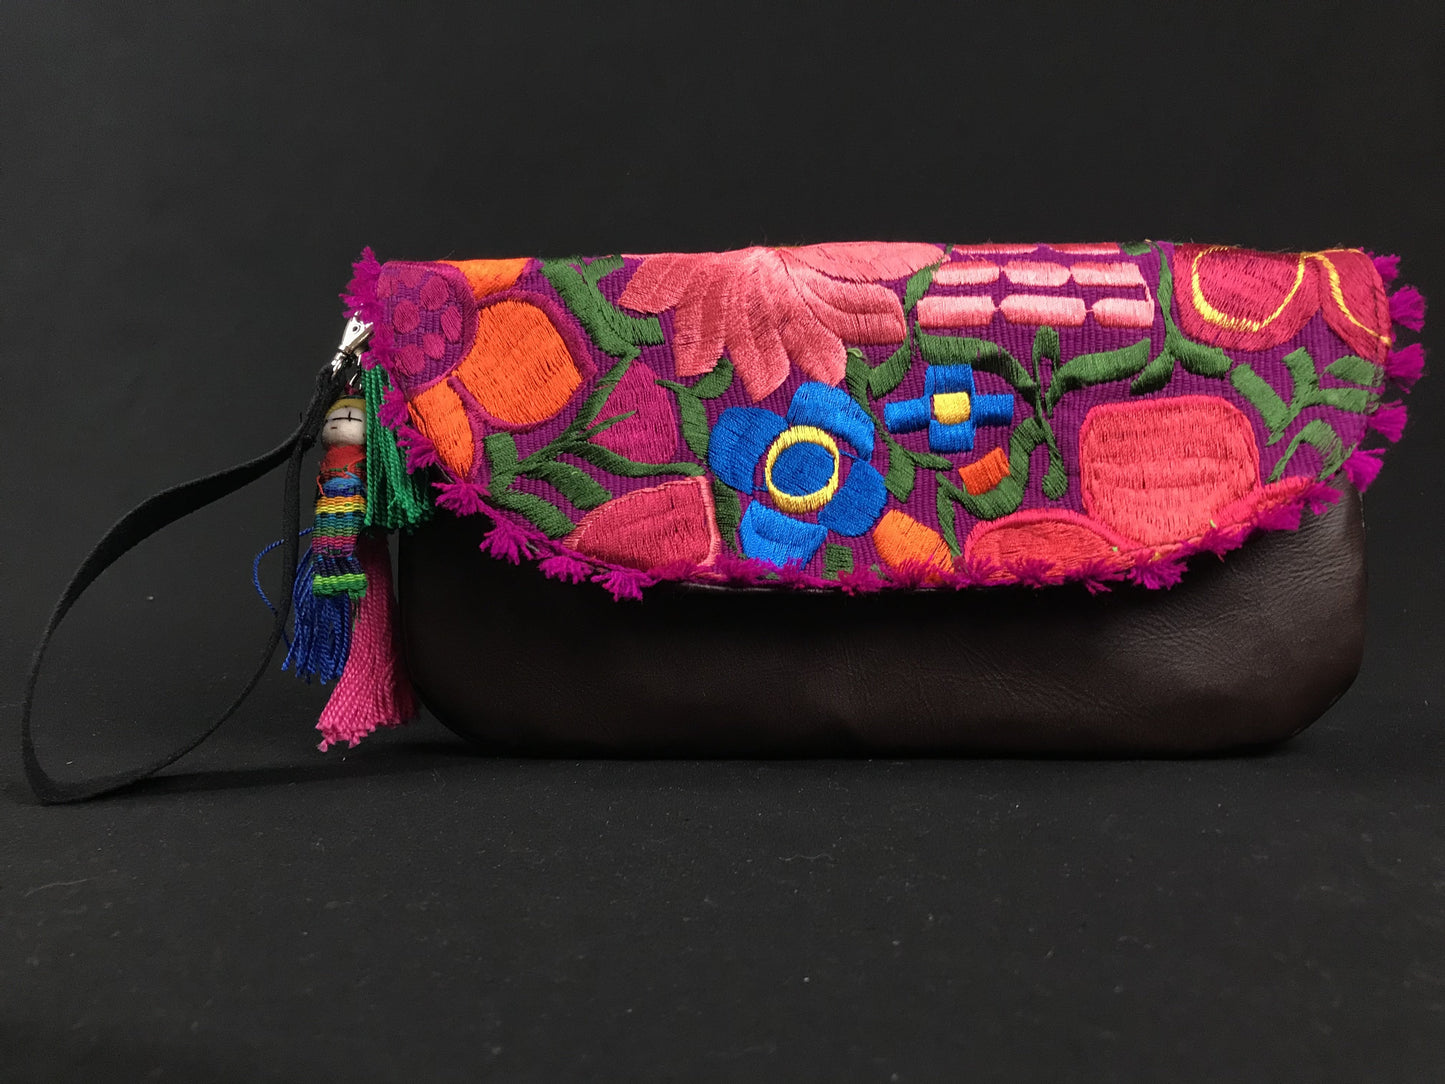 Guie Chiapas Embroidered Leather Wristlet Colores Decor